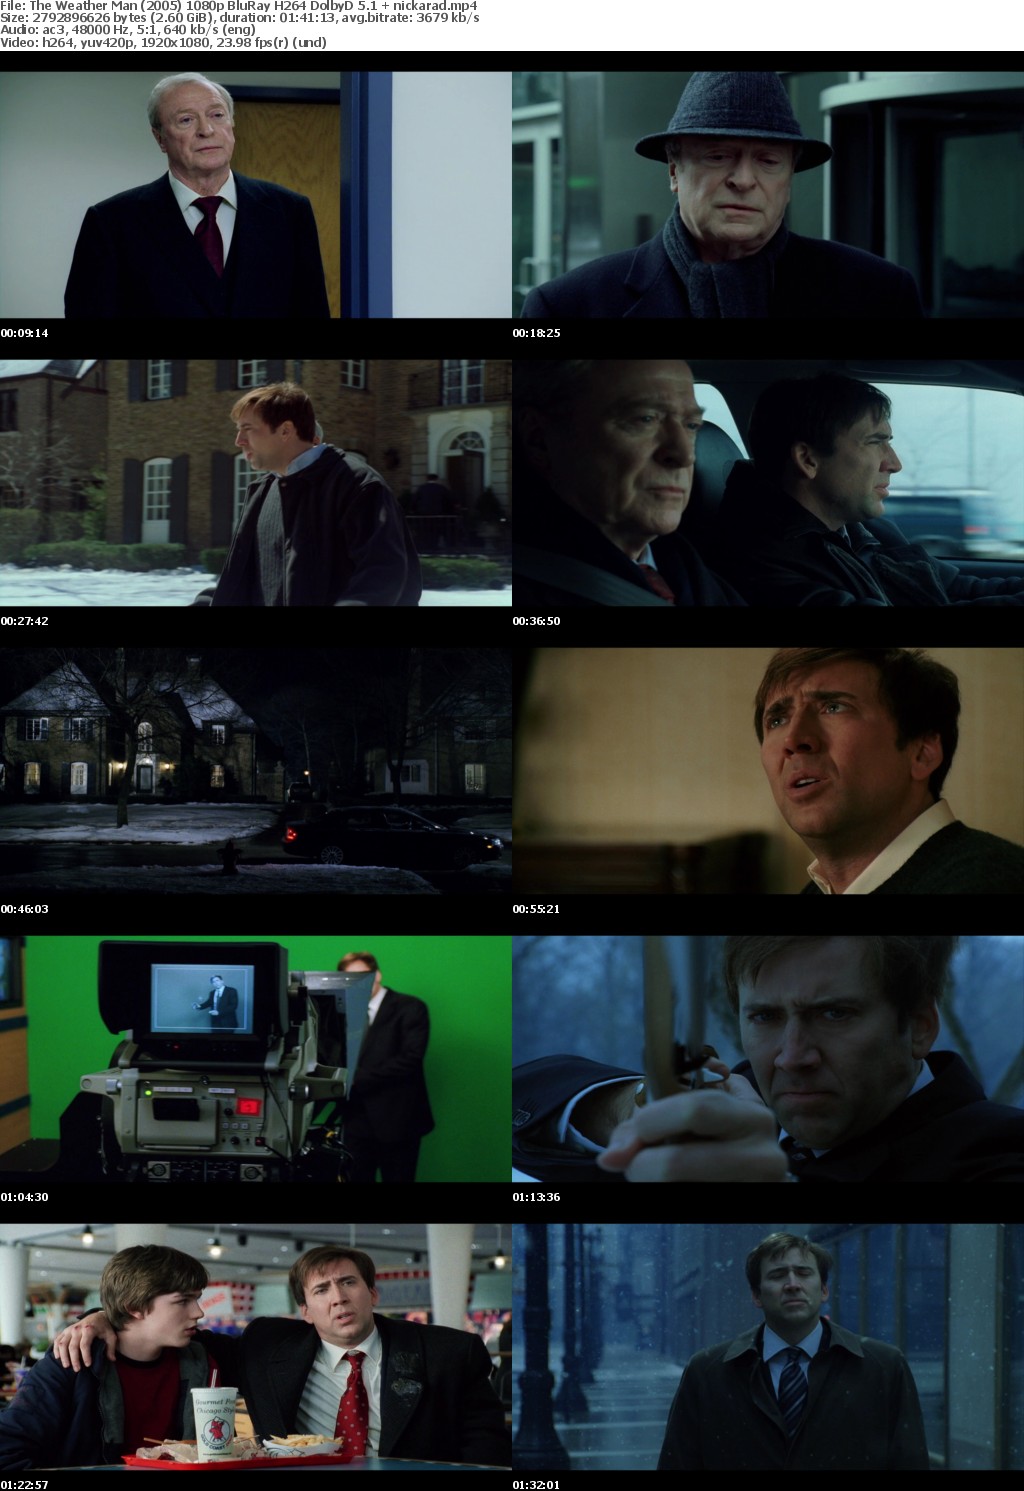 The Weather Man (2005) 1080p BluRay H264 DolbyD 5 1 nickarad